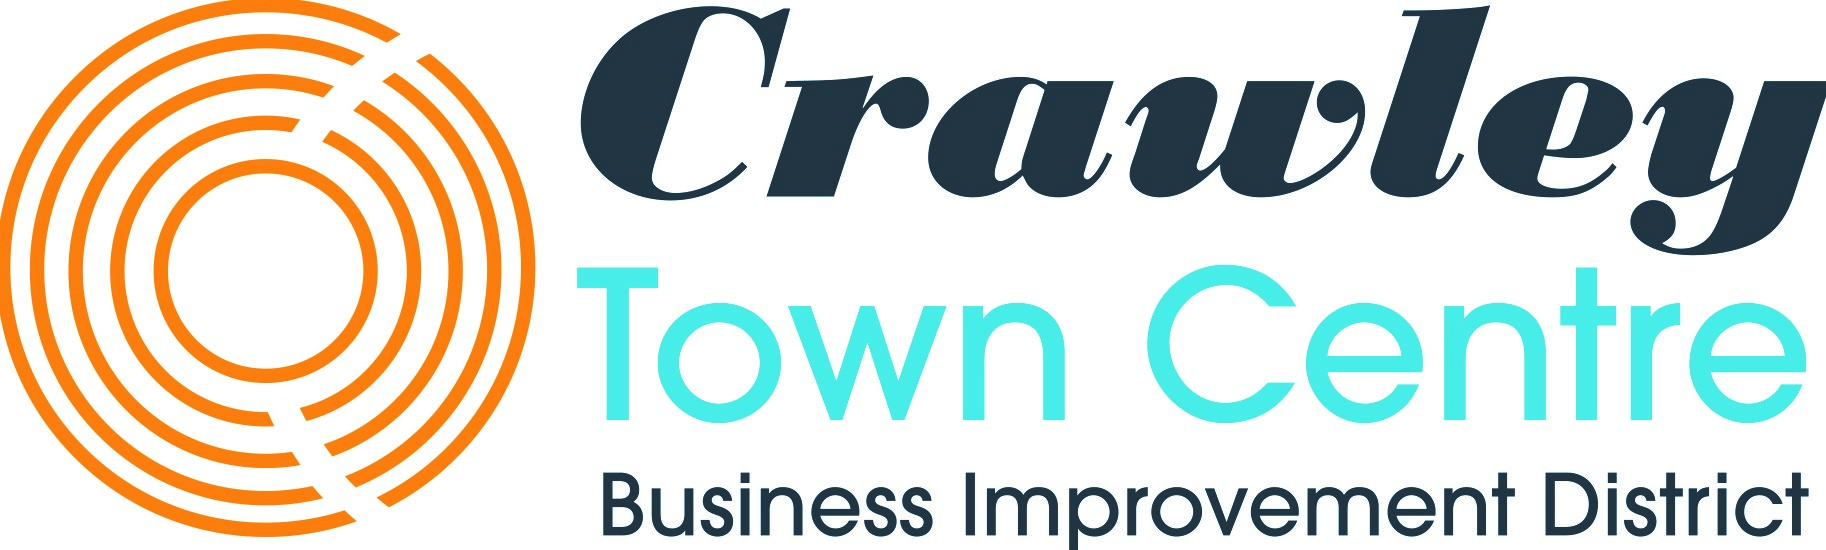 Crawley Town Centre BID Co Ltd